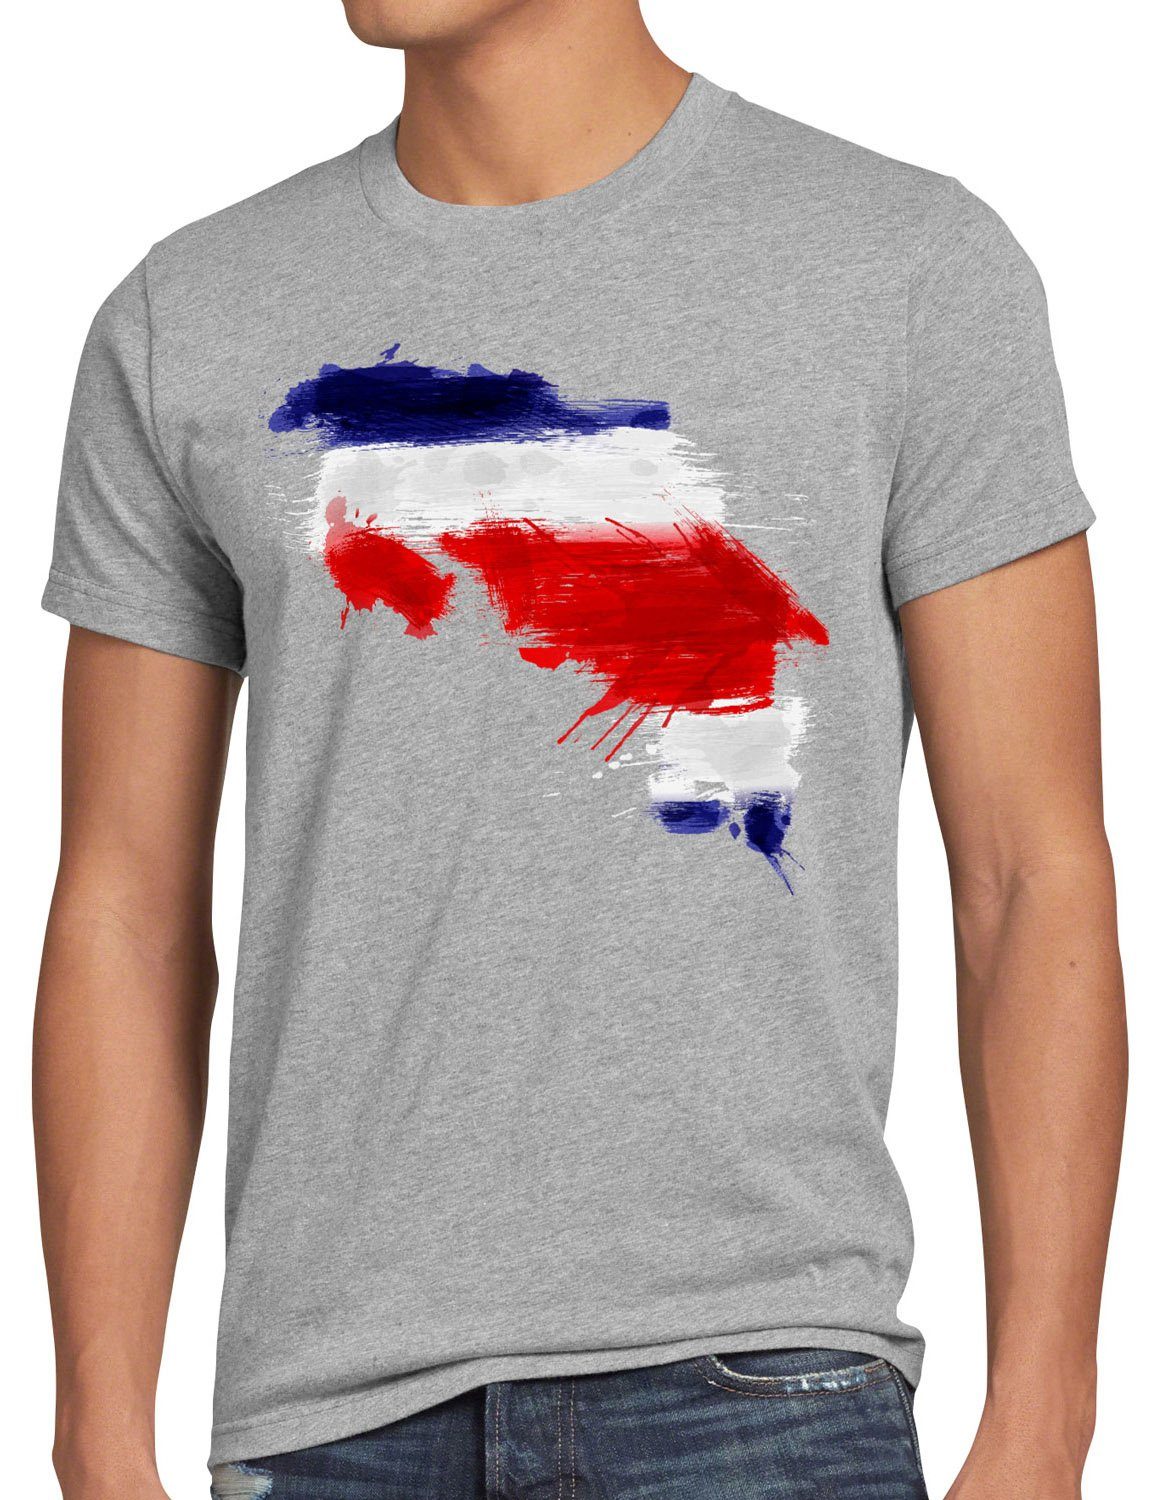 Print-Shirt EM Rica Costa Flagge WM T-Shirt Sport meliert Fahne style3 Herren grau Fußball